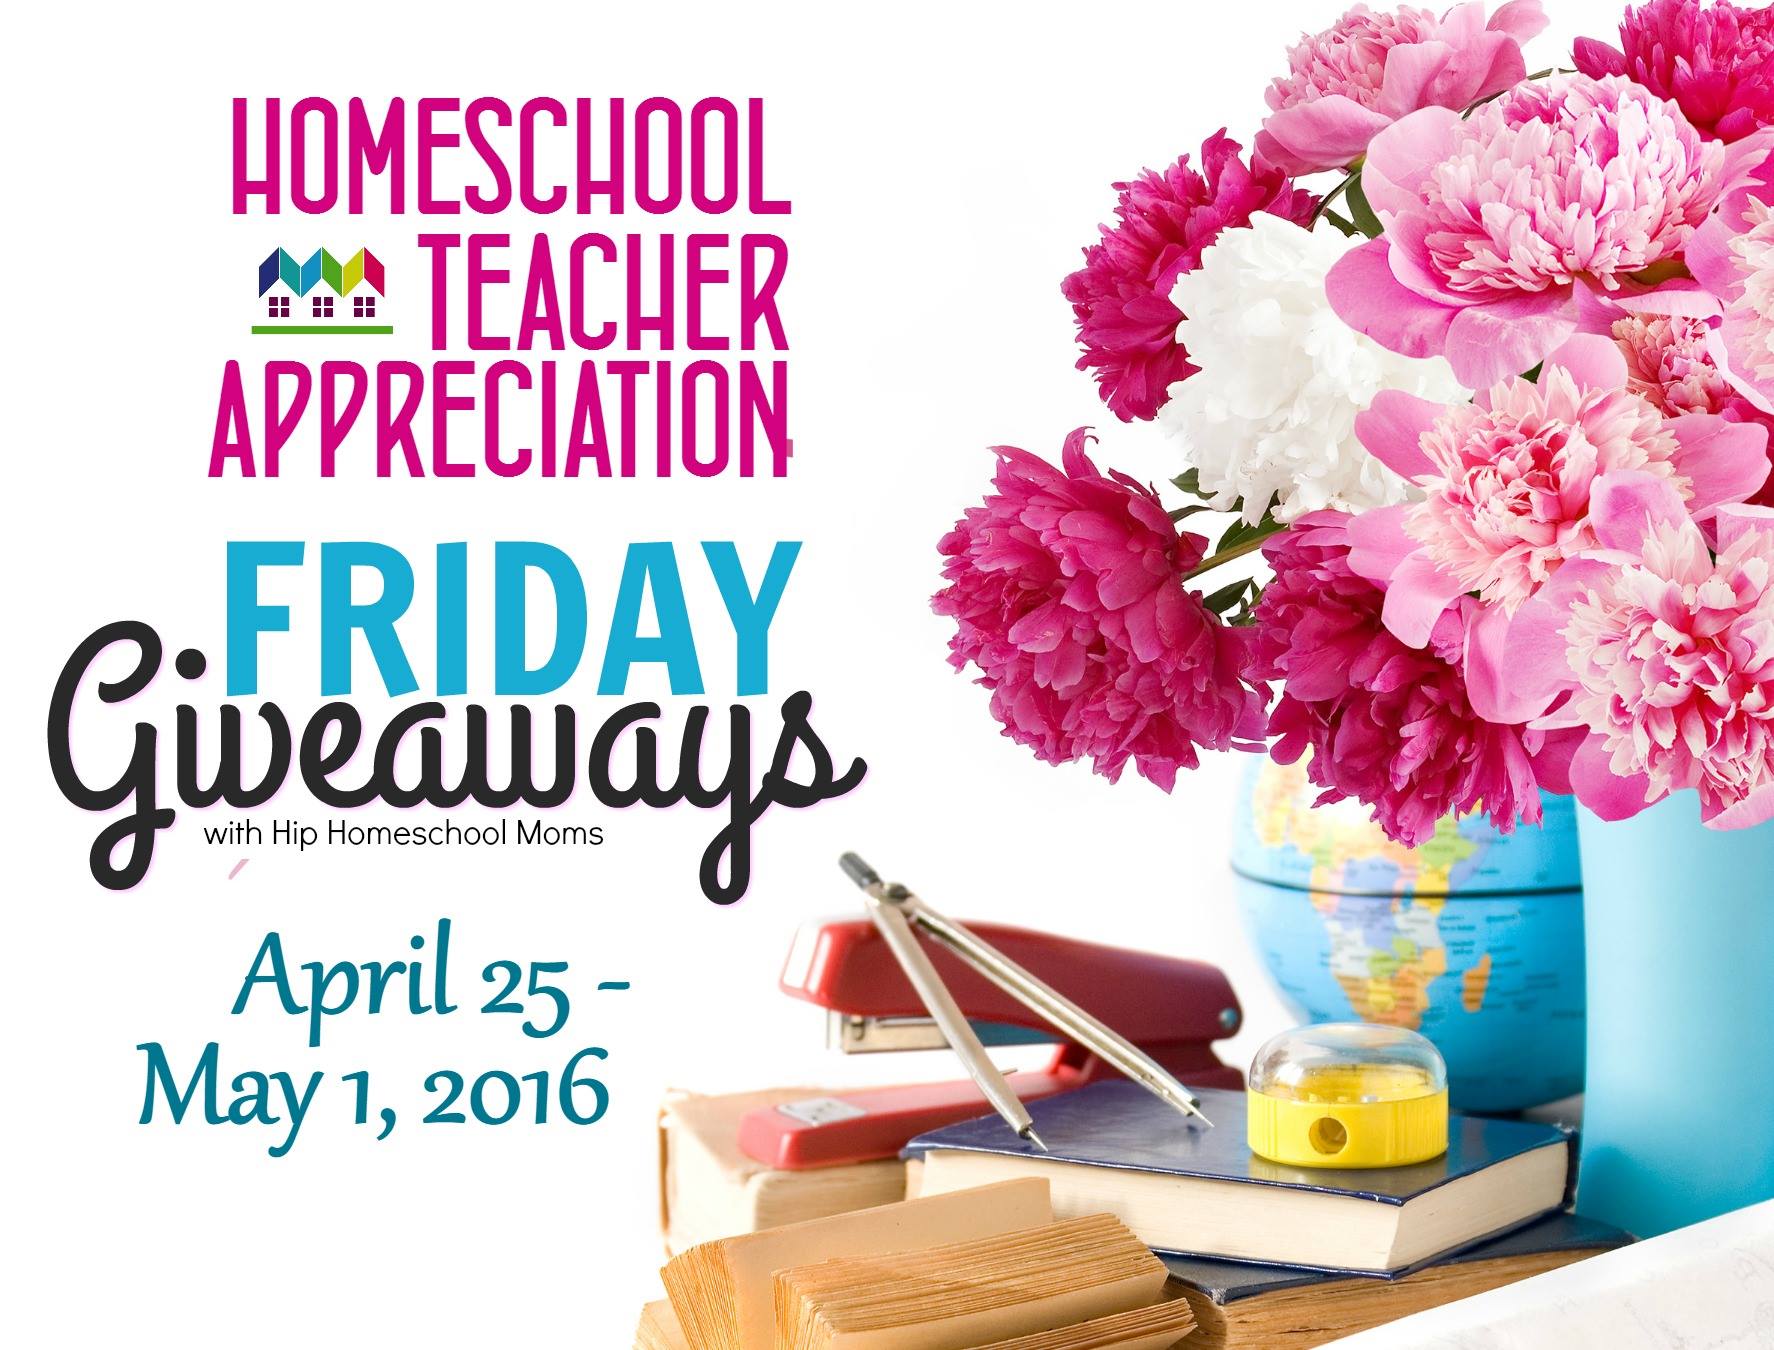 Friday’s Giveaways for Homeschool Teacher Appreciation Week